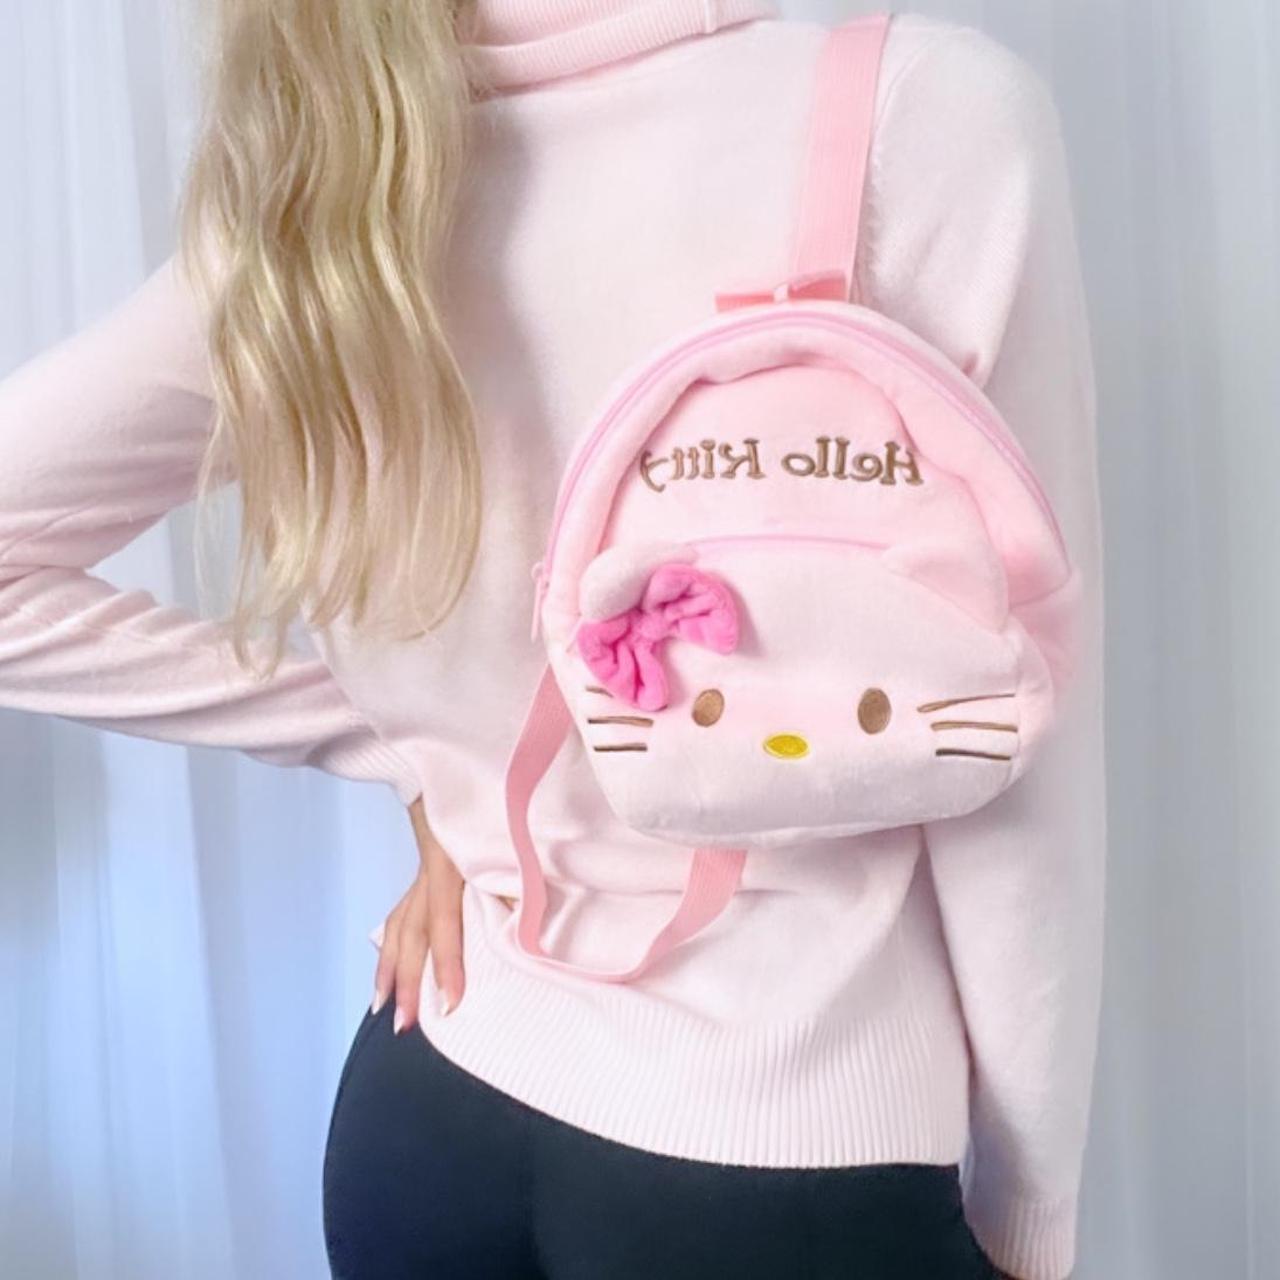 Victoria secret mini Backpack - black So cute & - Depop